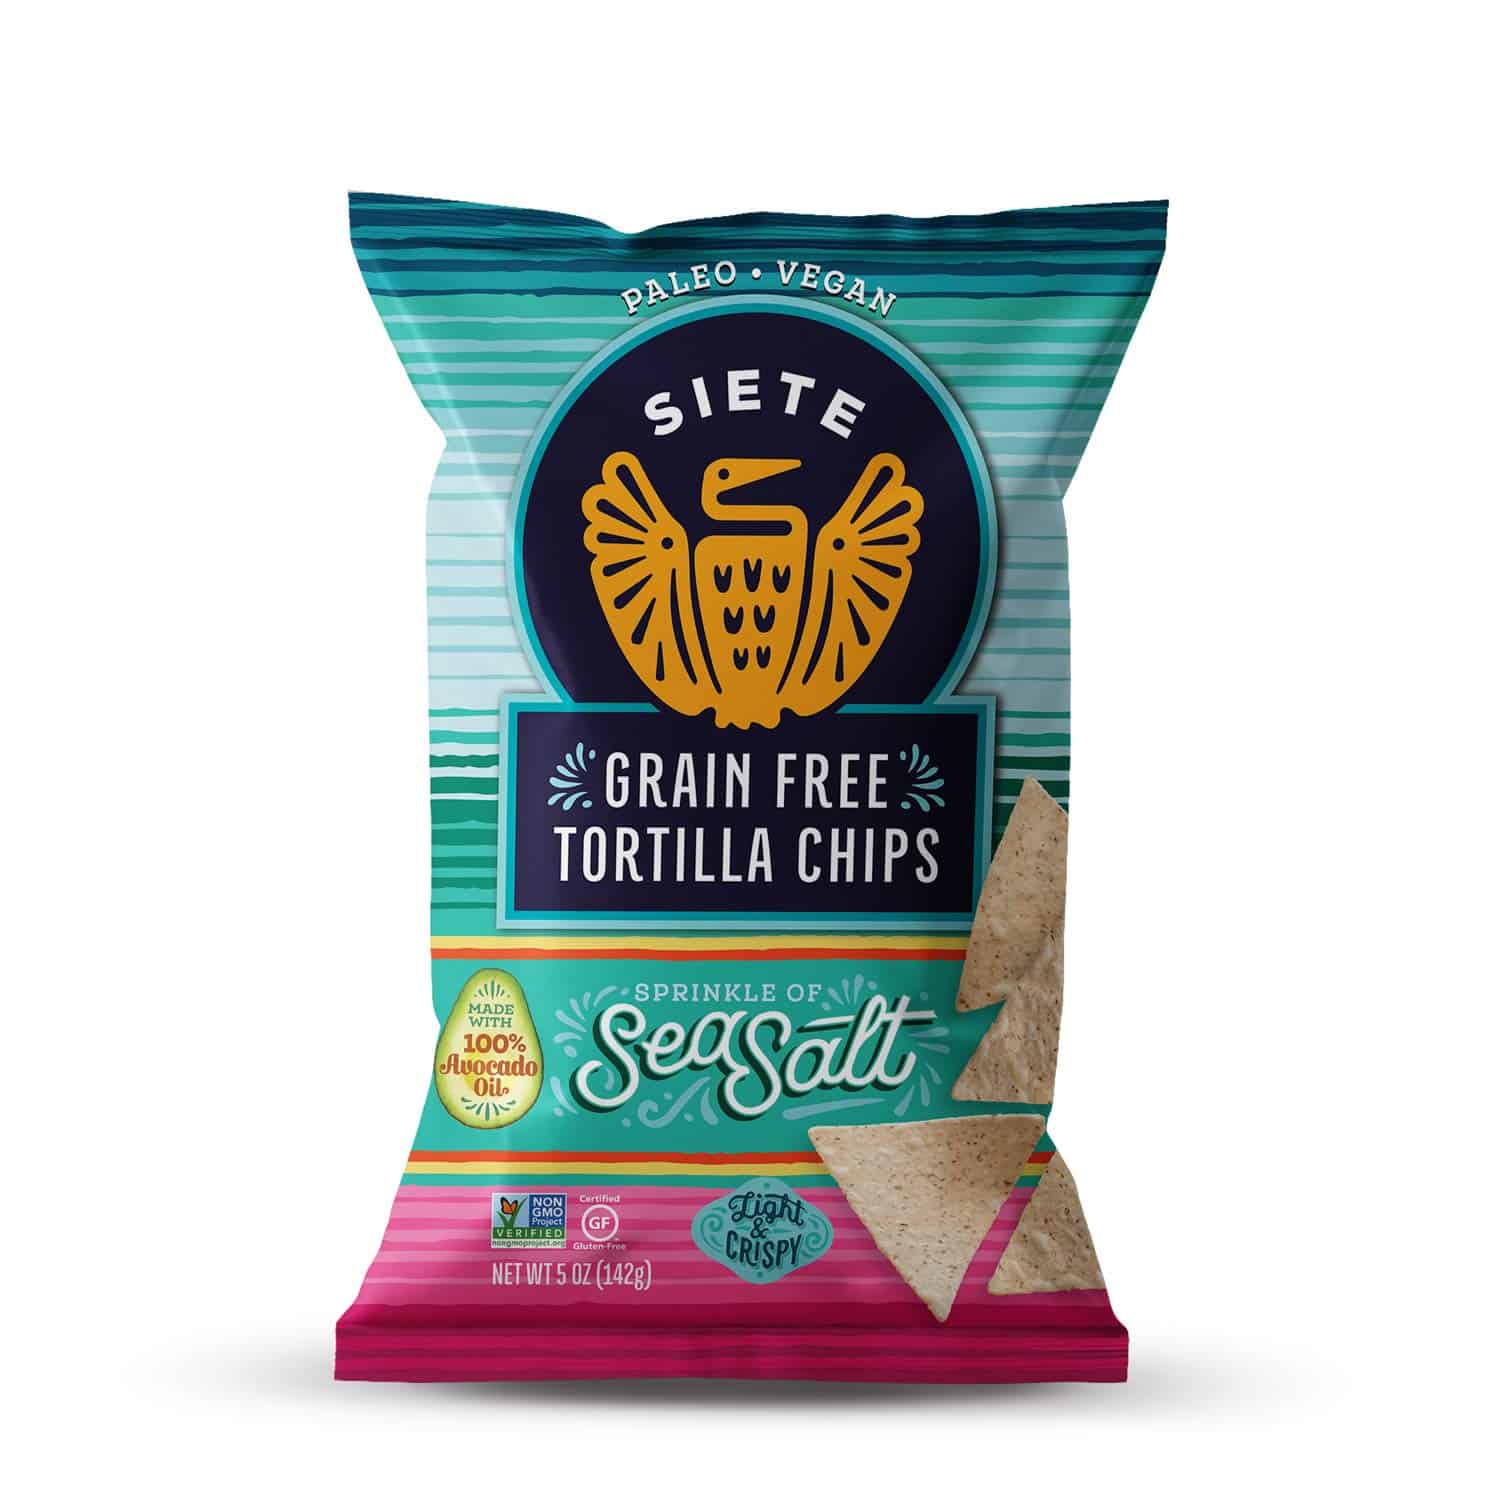 Siete Sea Salt Grain Free Tortilla Chips, 5 Oz. Bag